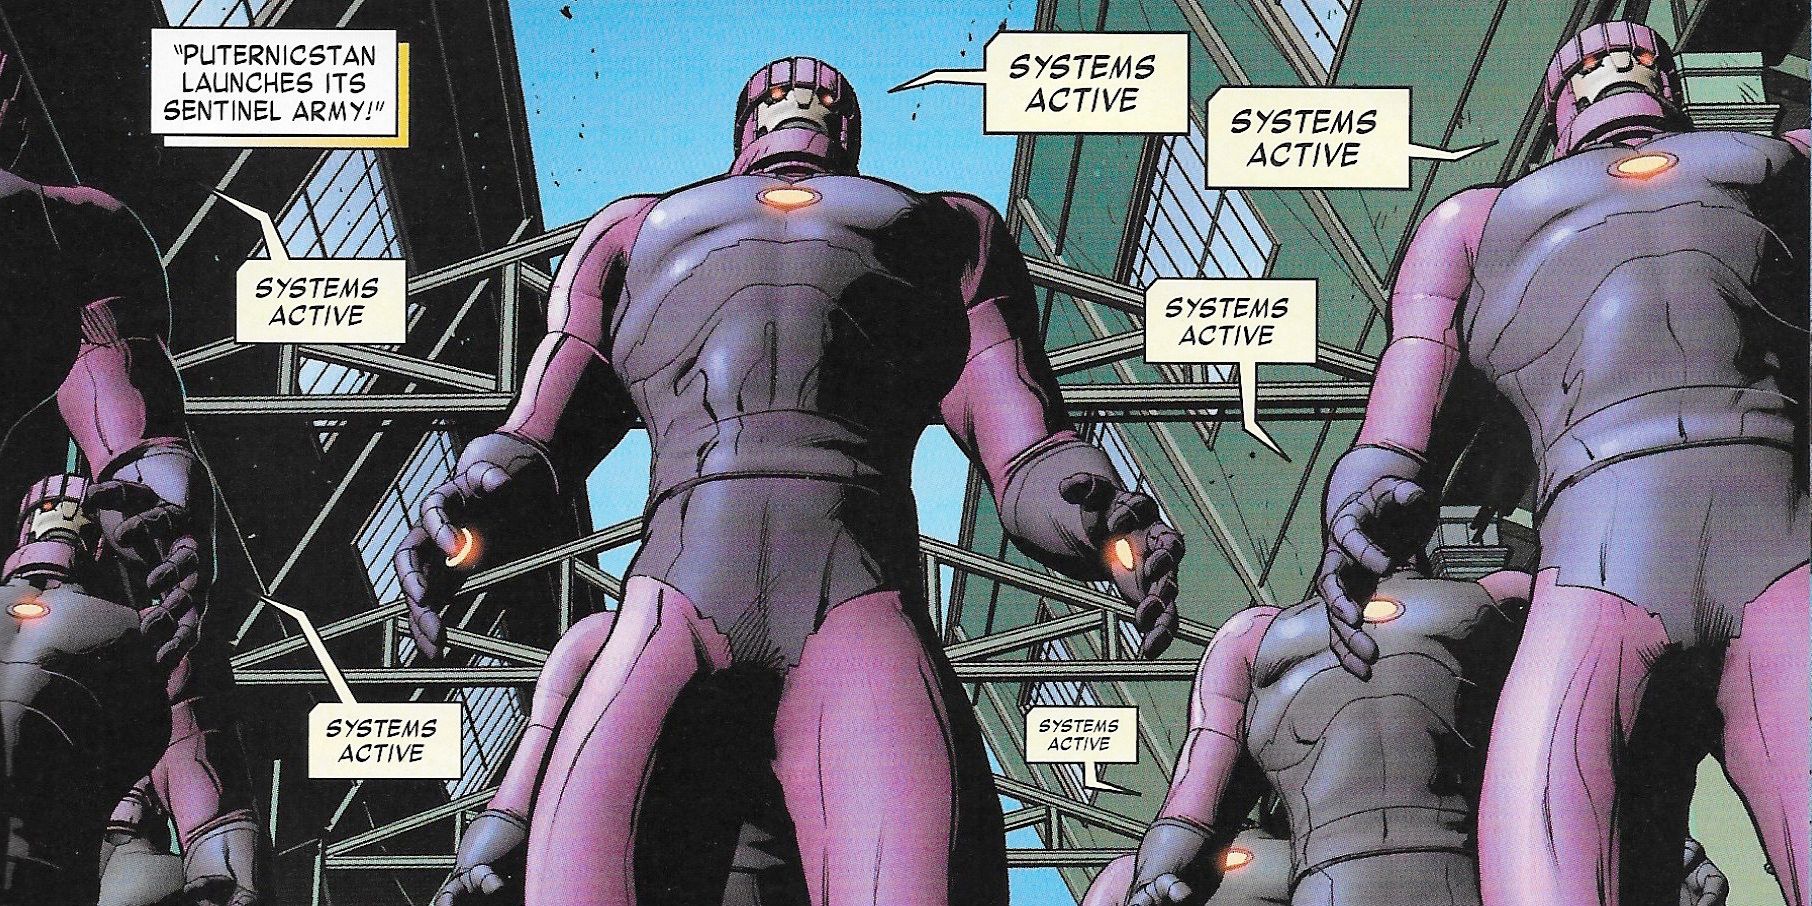 An image Puternicstan Sentinels from the X-Men comics